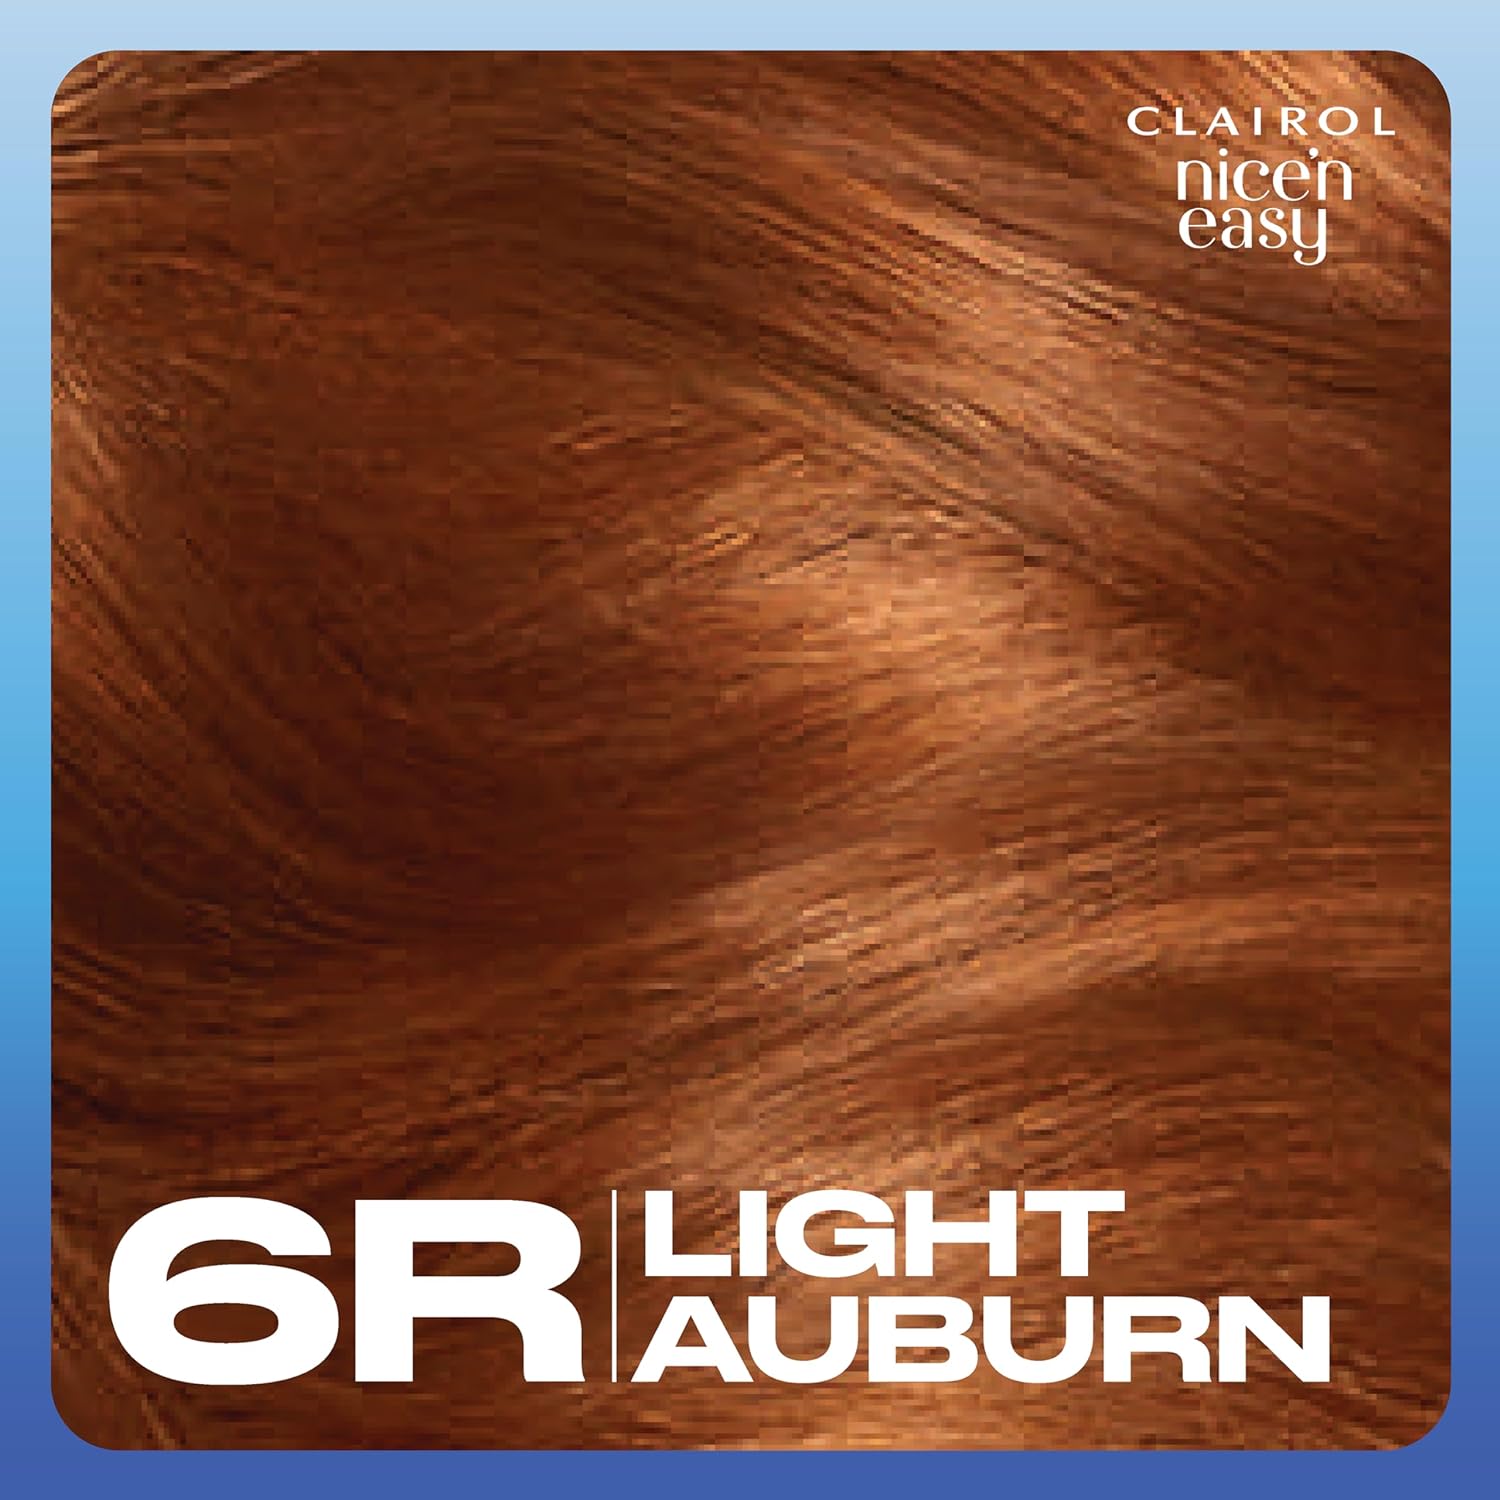 Clairol Nice'n Easy Crème, Permanent Hair Dye, 6R Light Auburn